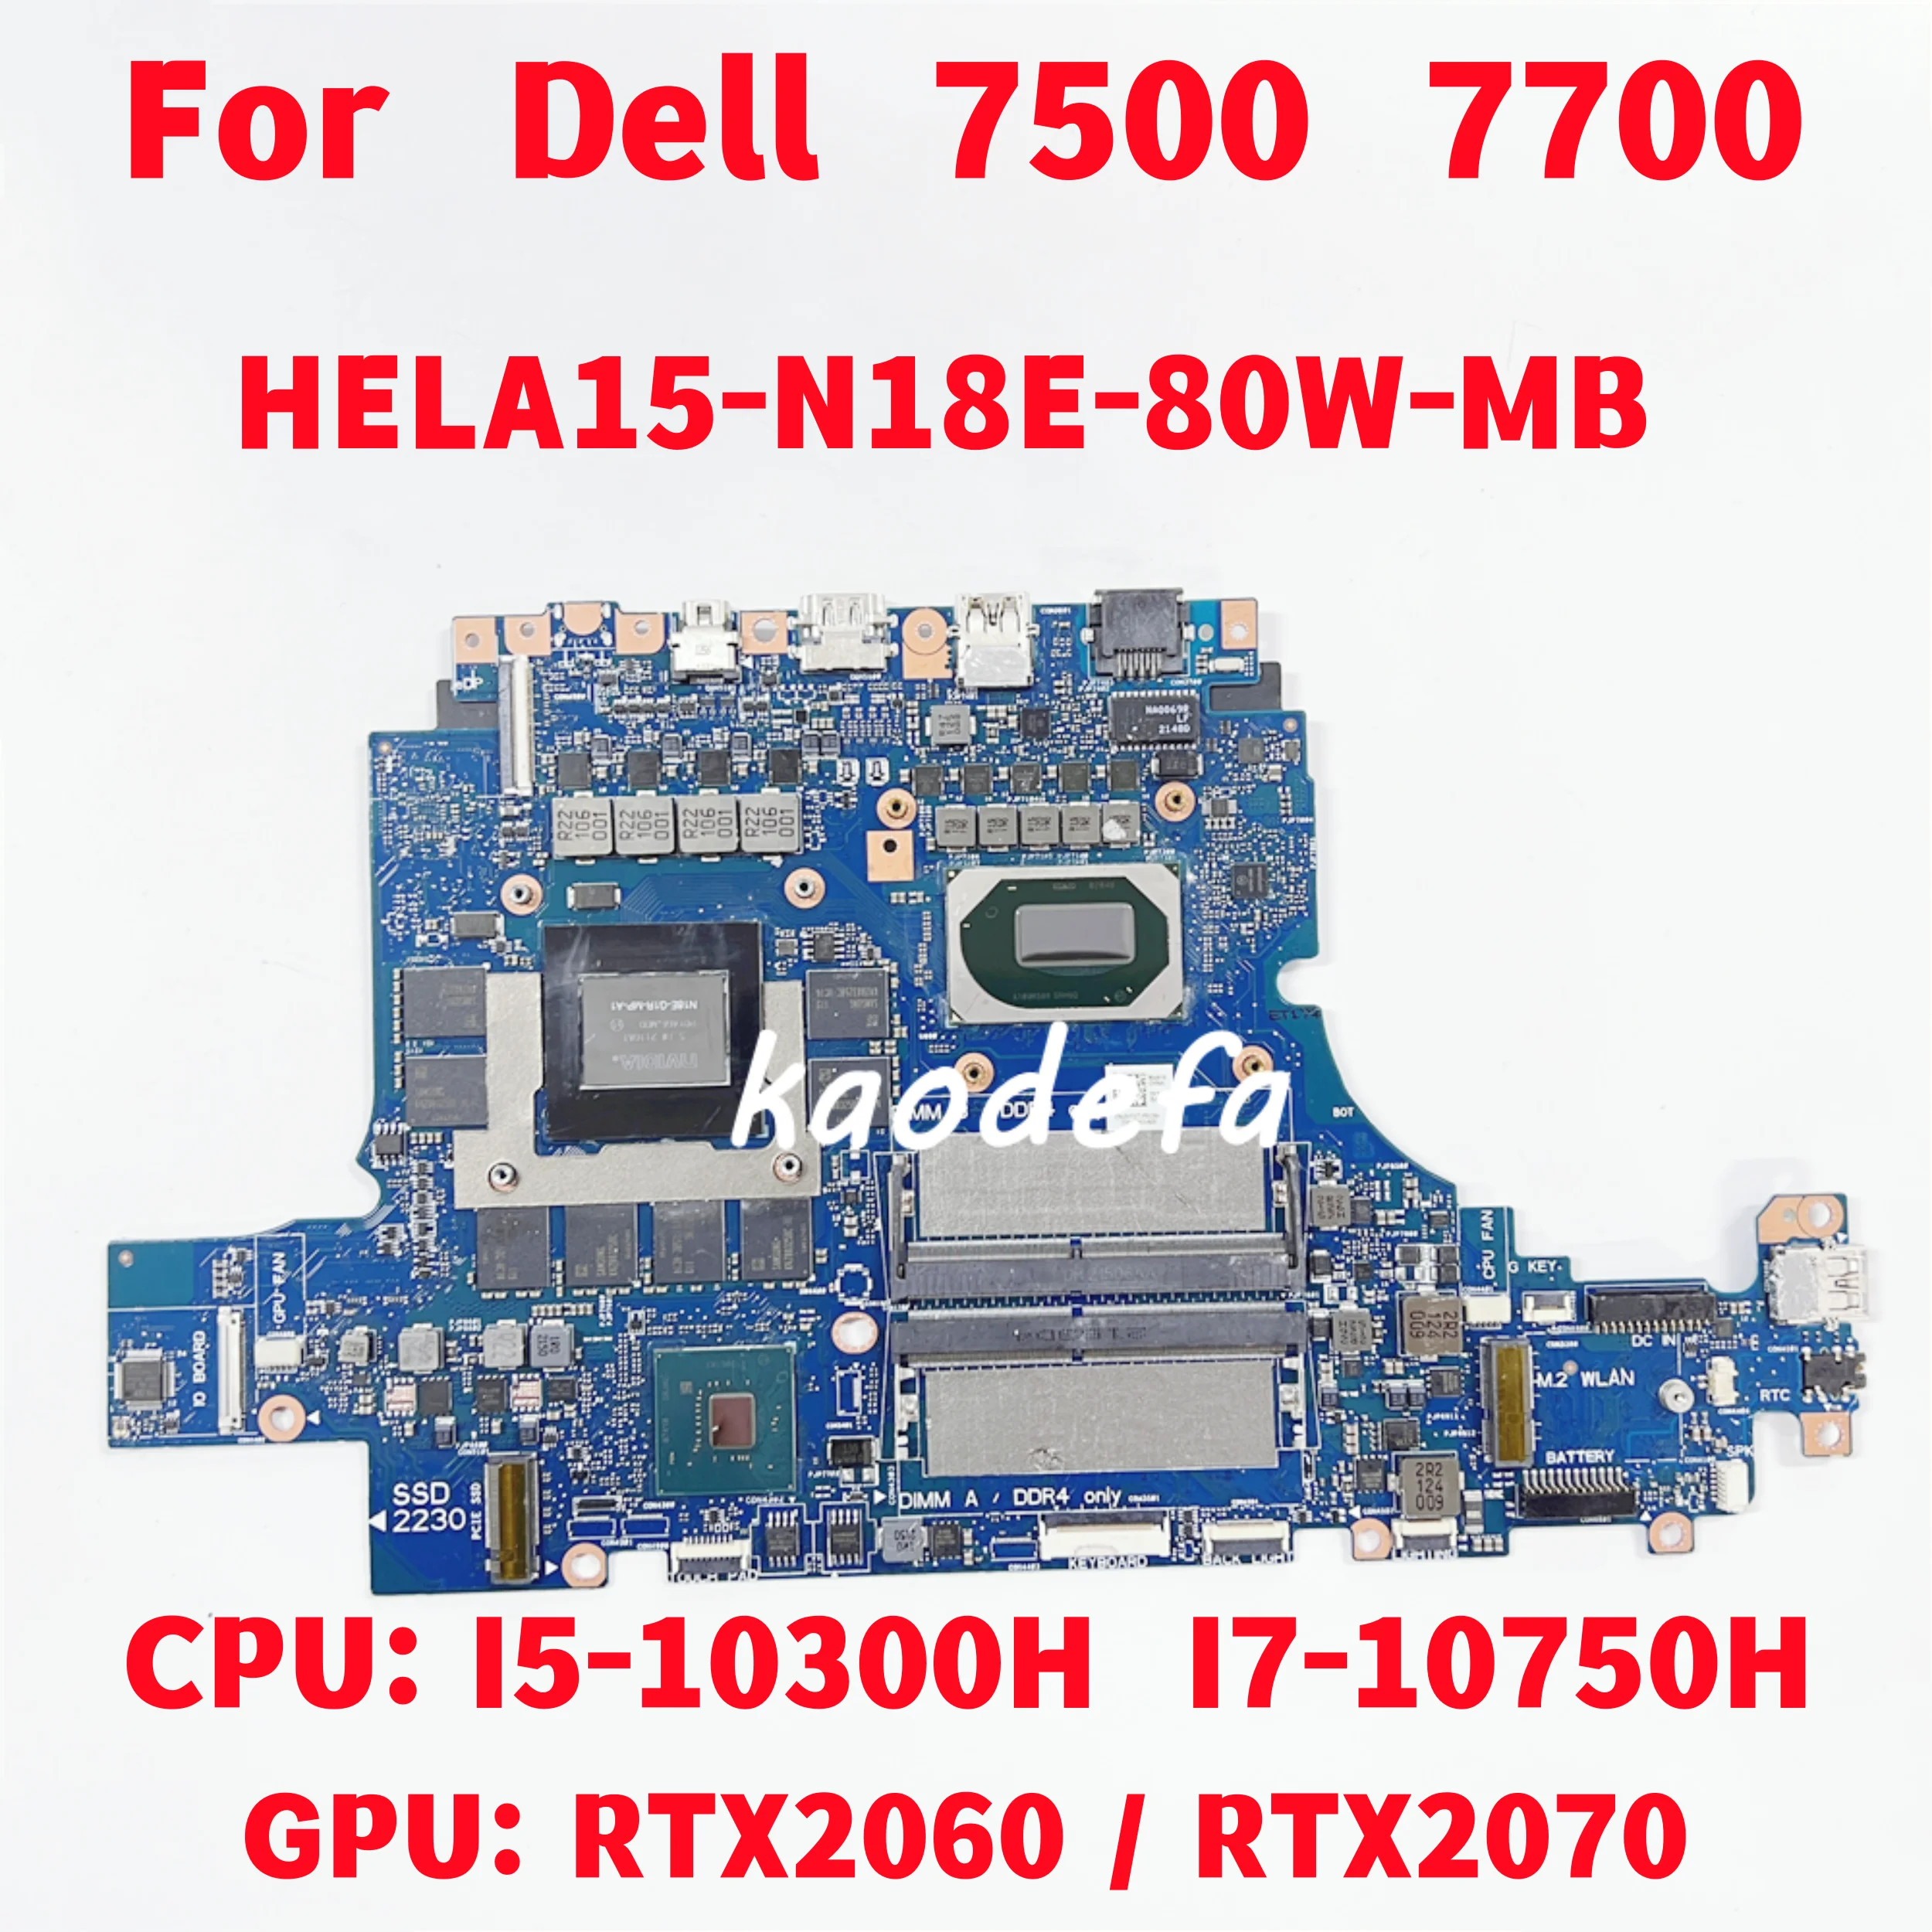 

HELA15-N18E-80W-MB For Dell 7500 7700 Laptop Motherboard CPU: I5-10300H I7-10750H GPU: RTX2060 / RTX2070 6GB / 8GB 100% Test OK